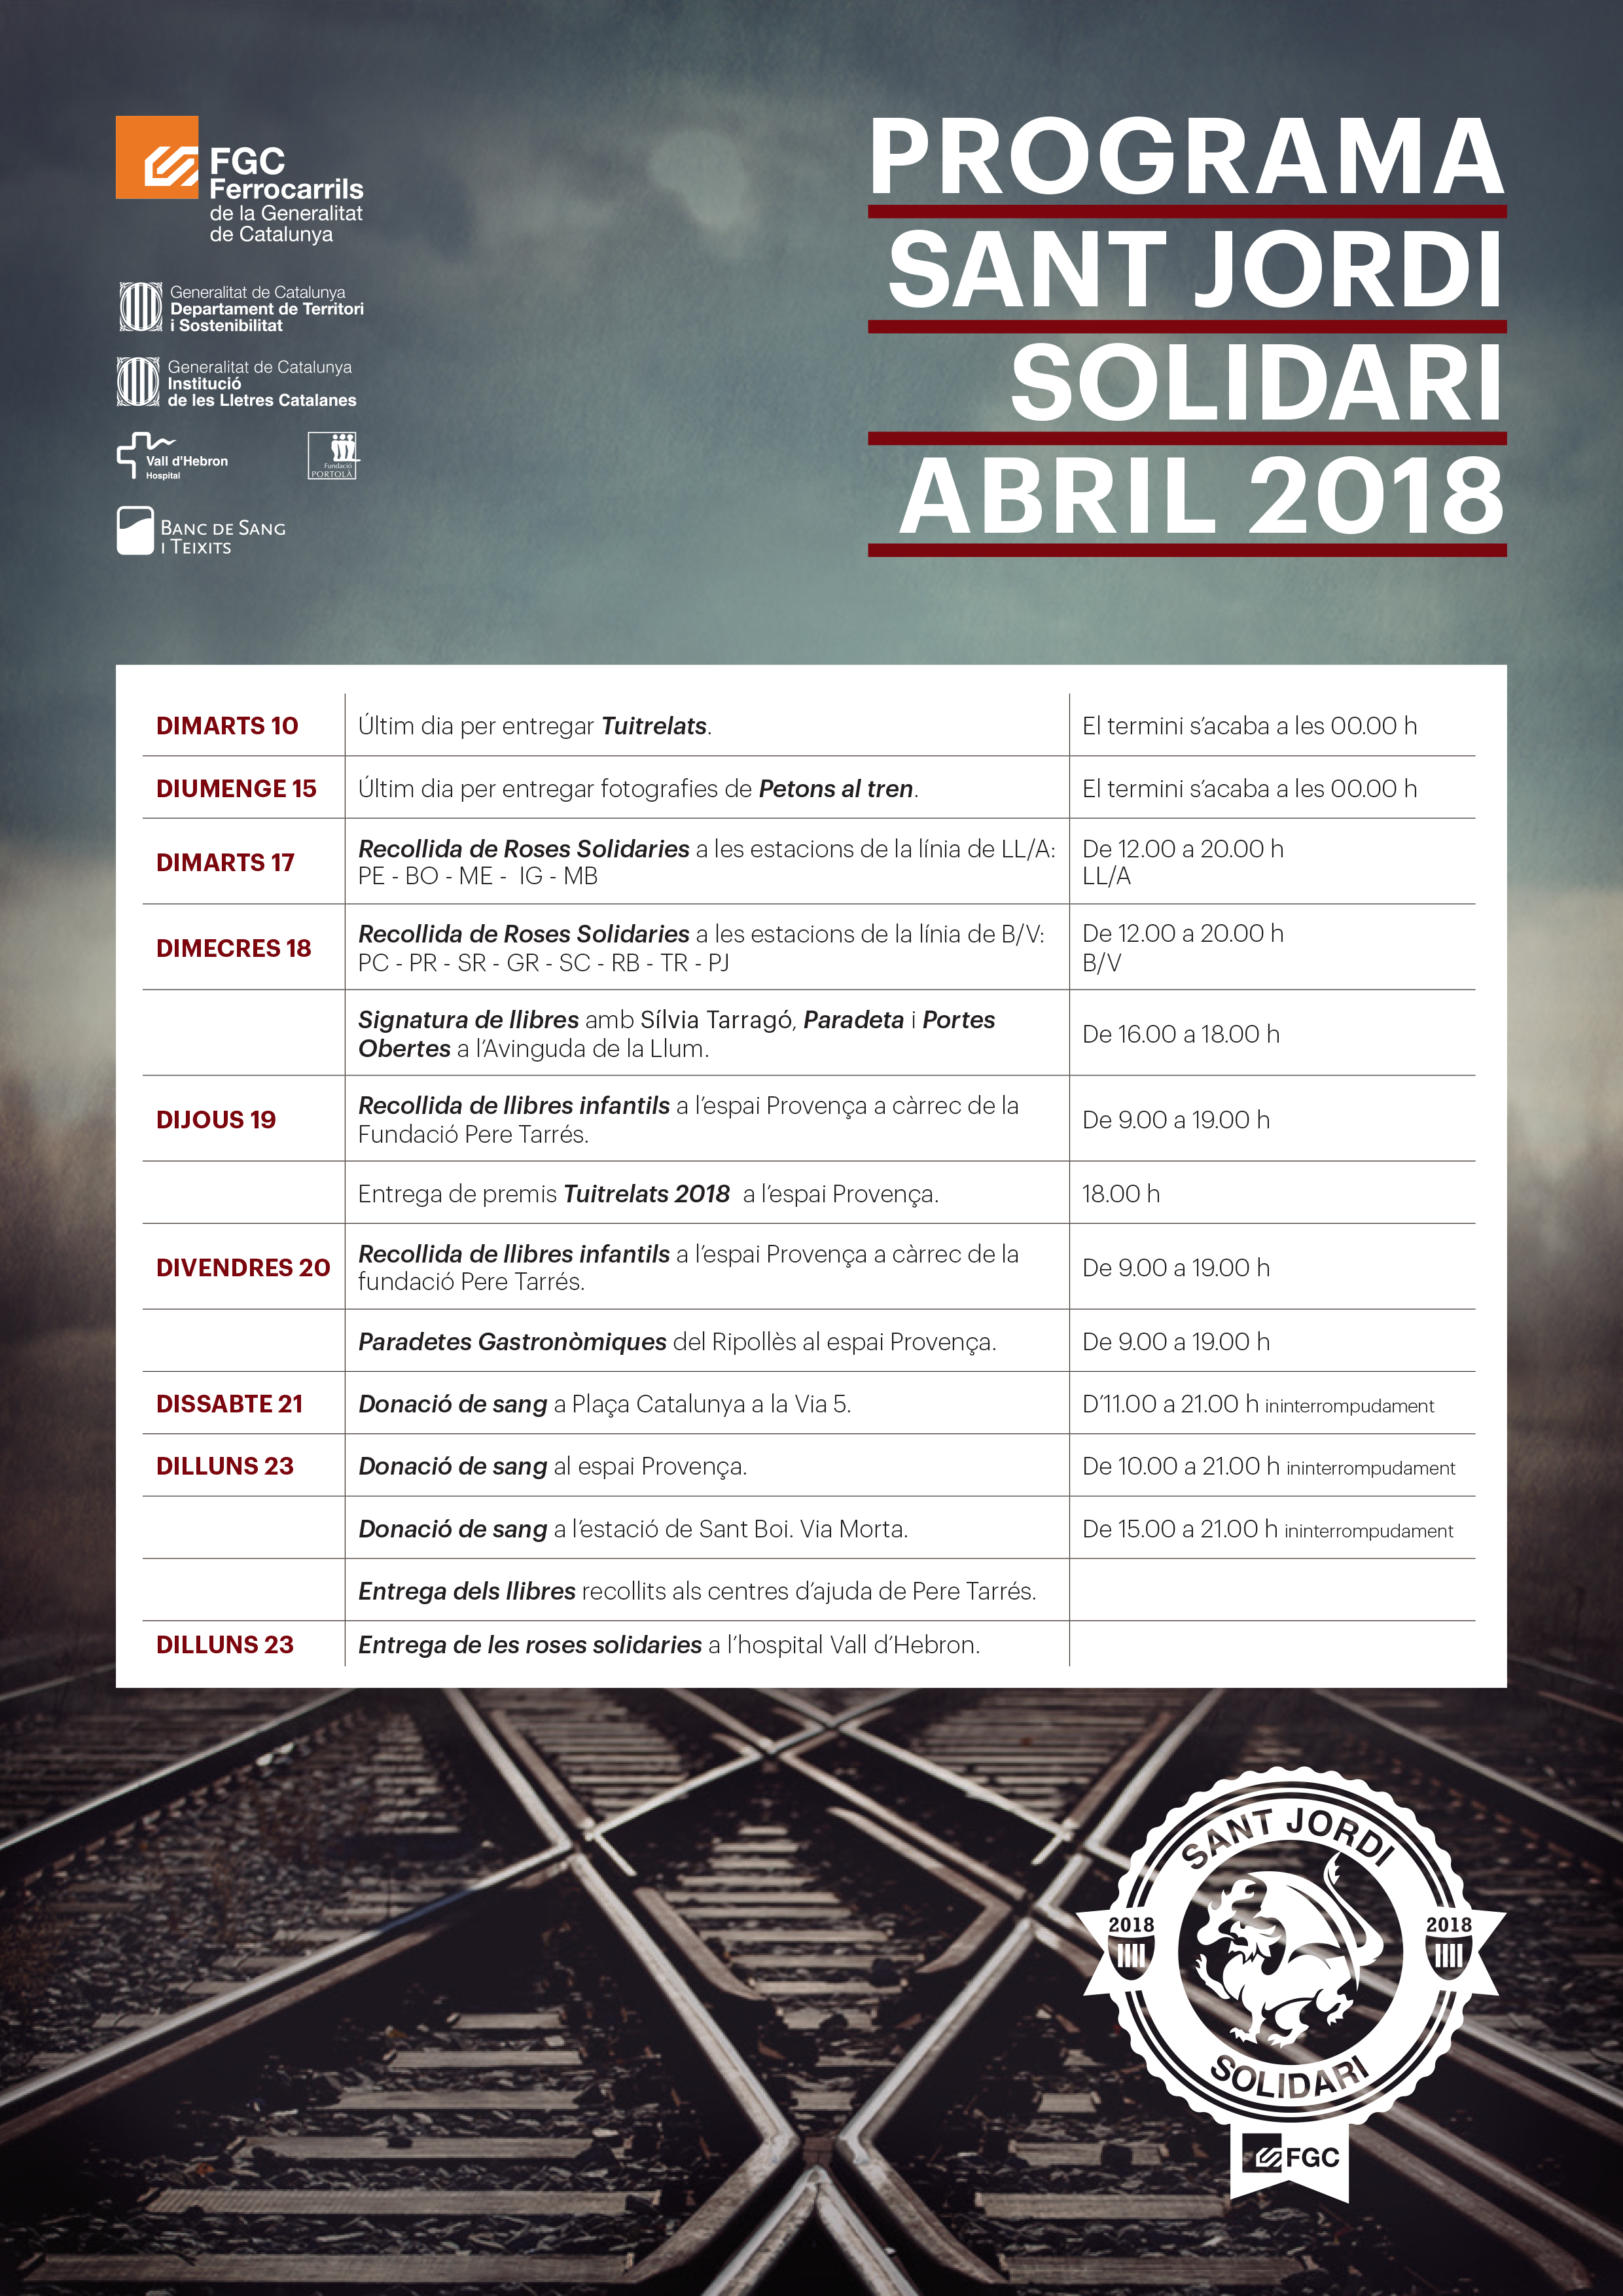 Program April 2018 Sant Jordi FGC v2